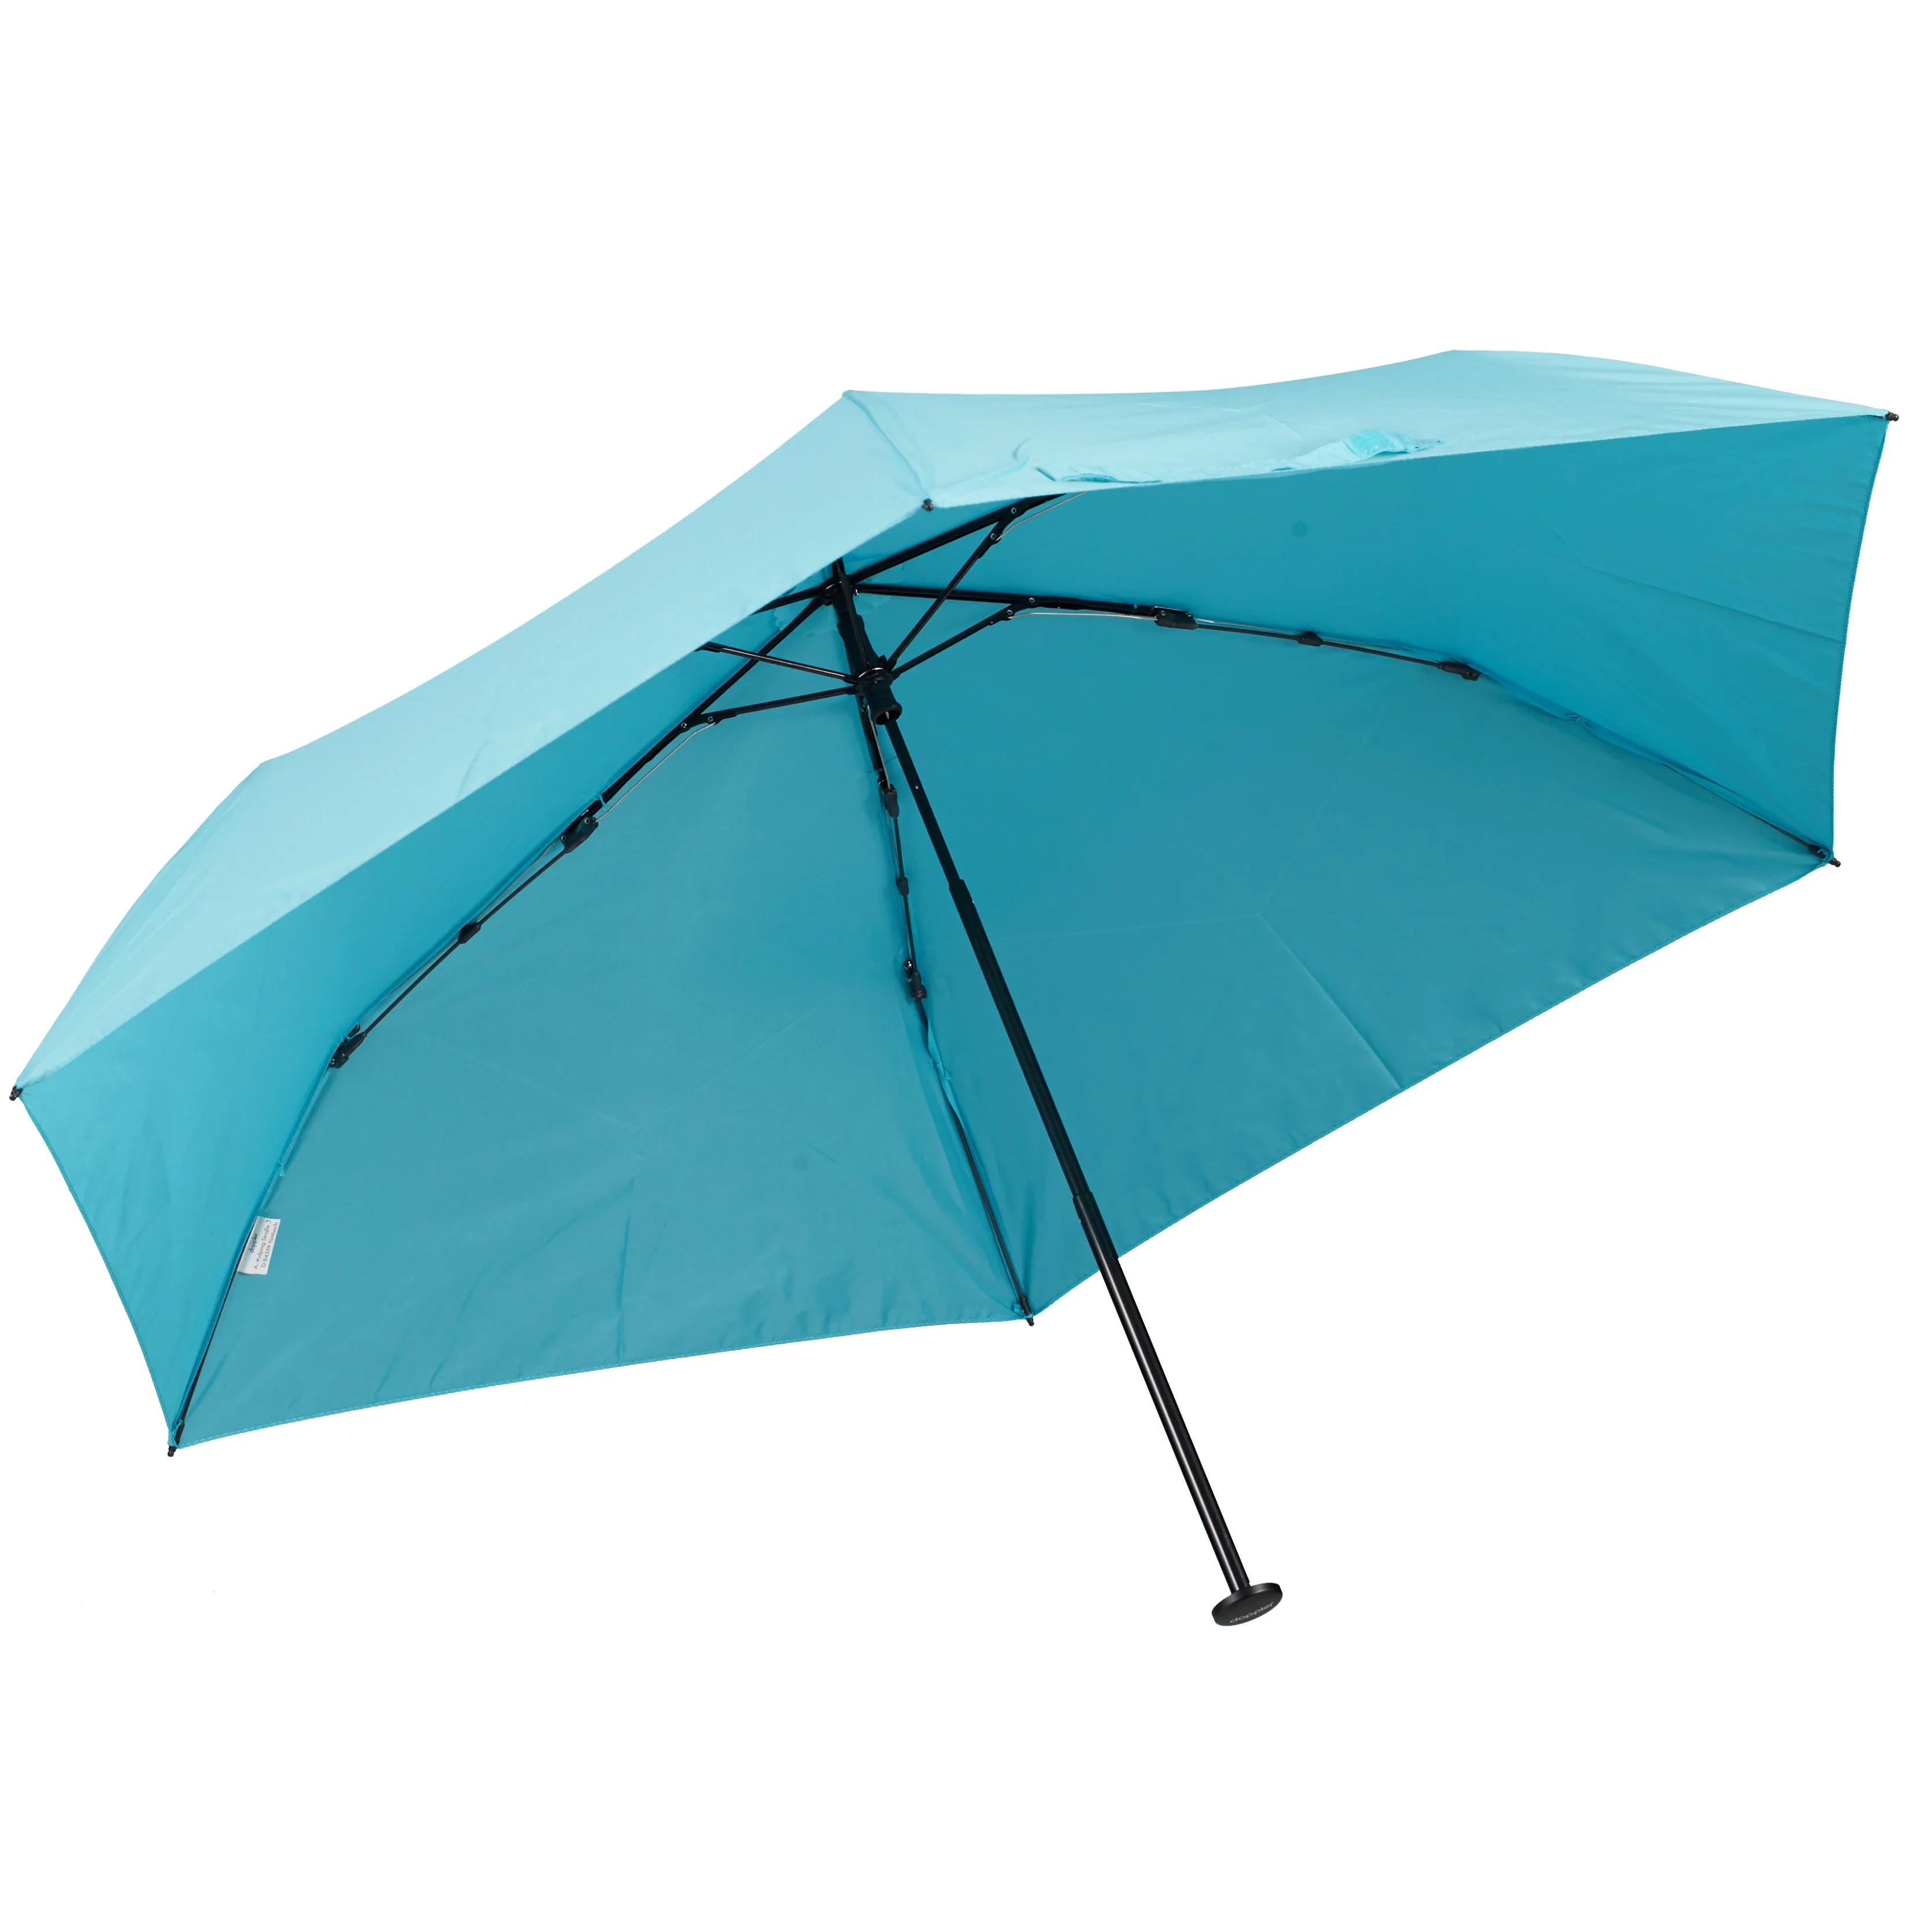 Doppler pocket black cm pocket - 21 Zero99 umbrellas umbrella